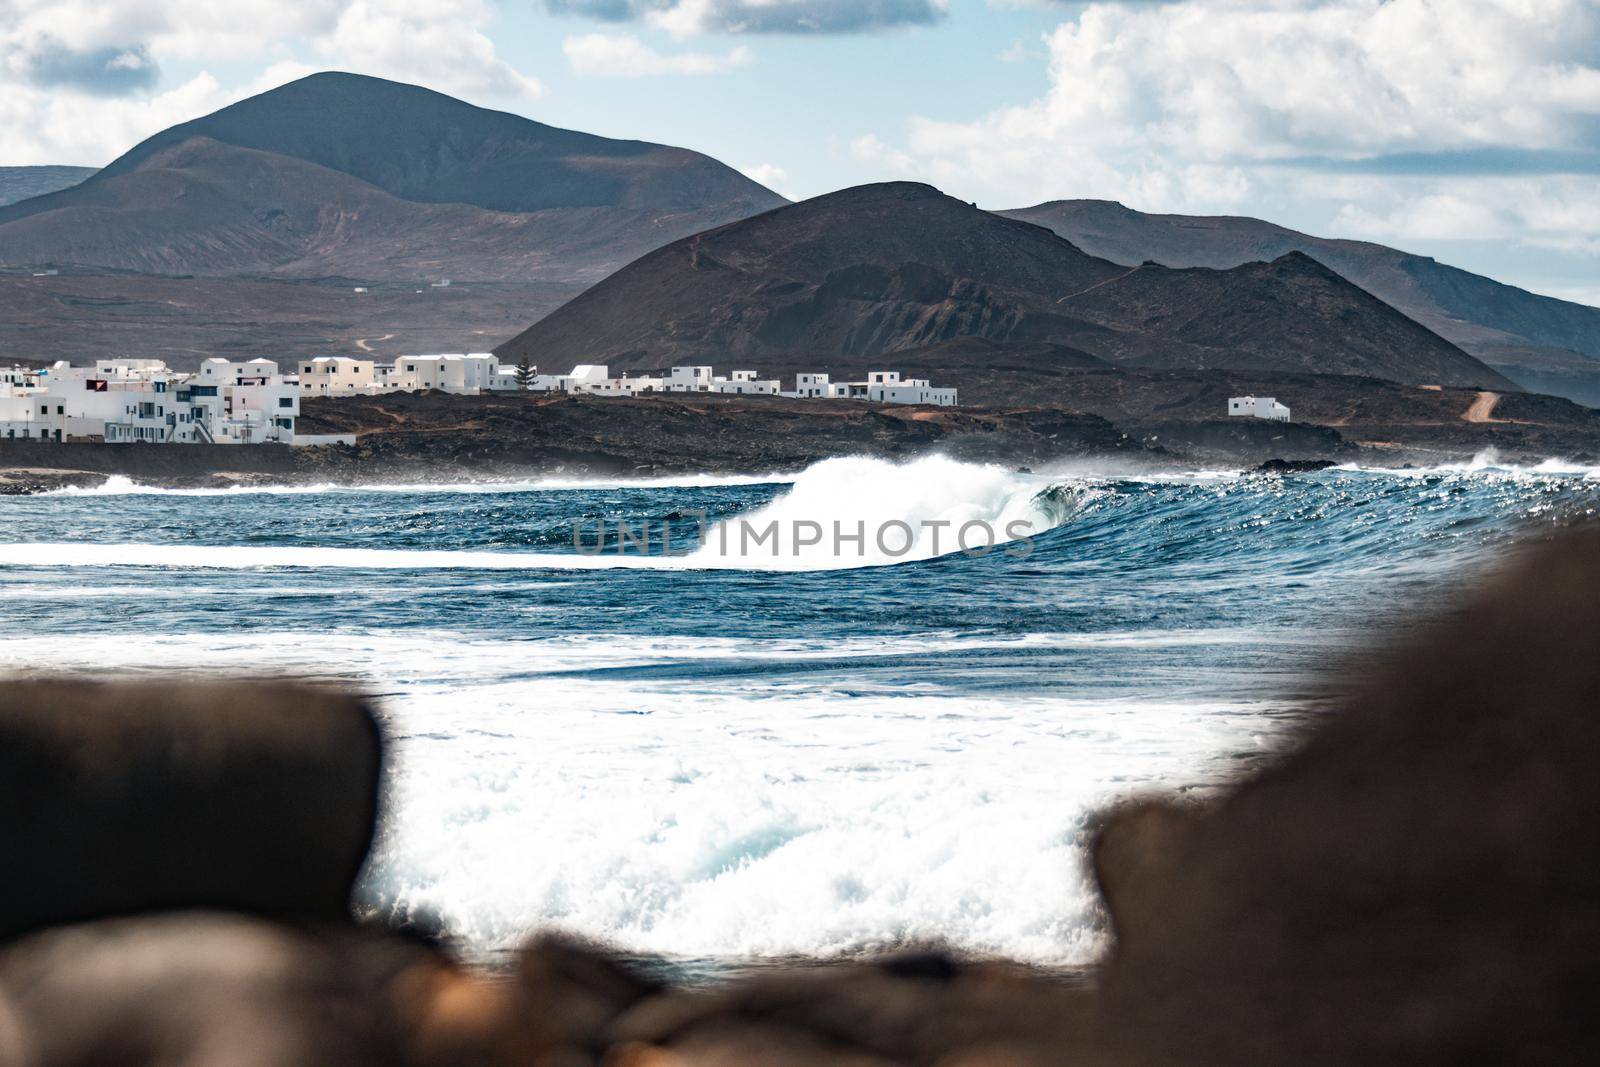 Wild rocky coastline of surf spot La Santa Lanzarote, Canary Islands, Spain. Surfer riding a big wave in rocky bay, volcano mountain in background. by kasto